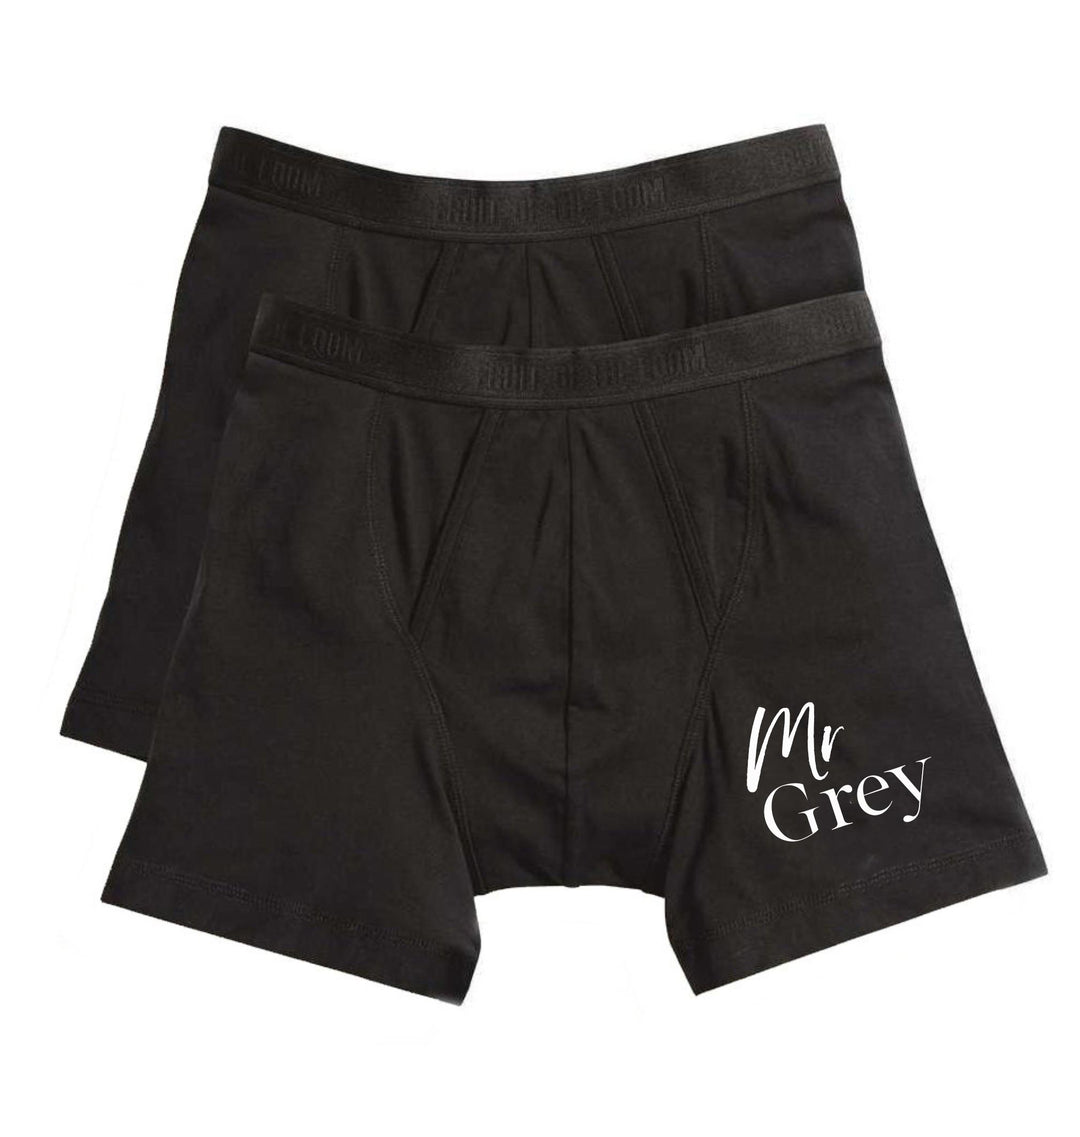 Underwear For Men | Boxer Briefs - Personalise Your Own